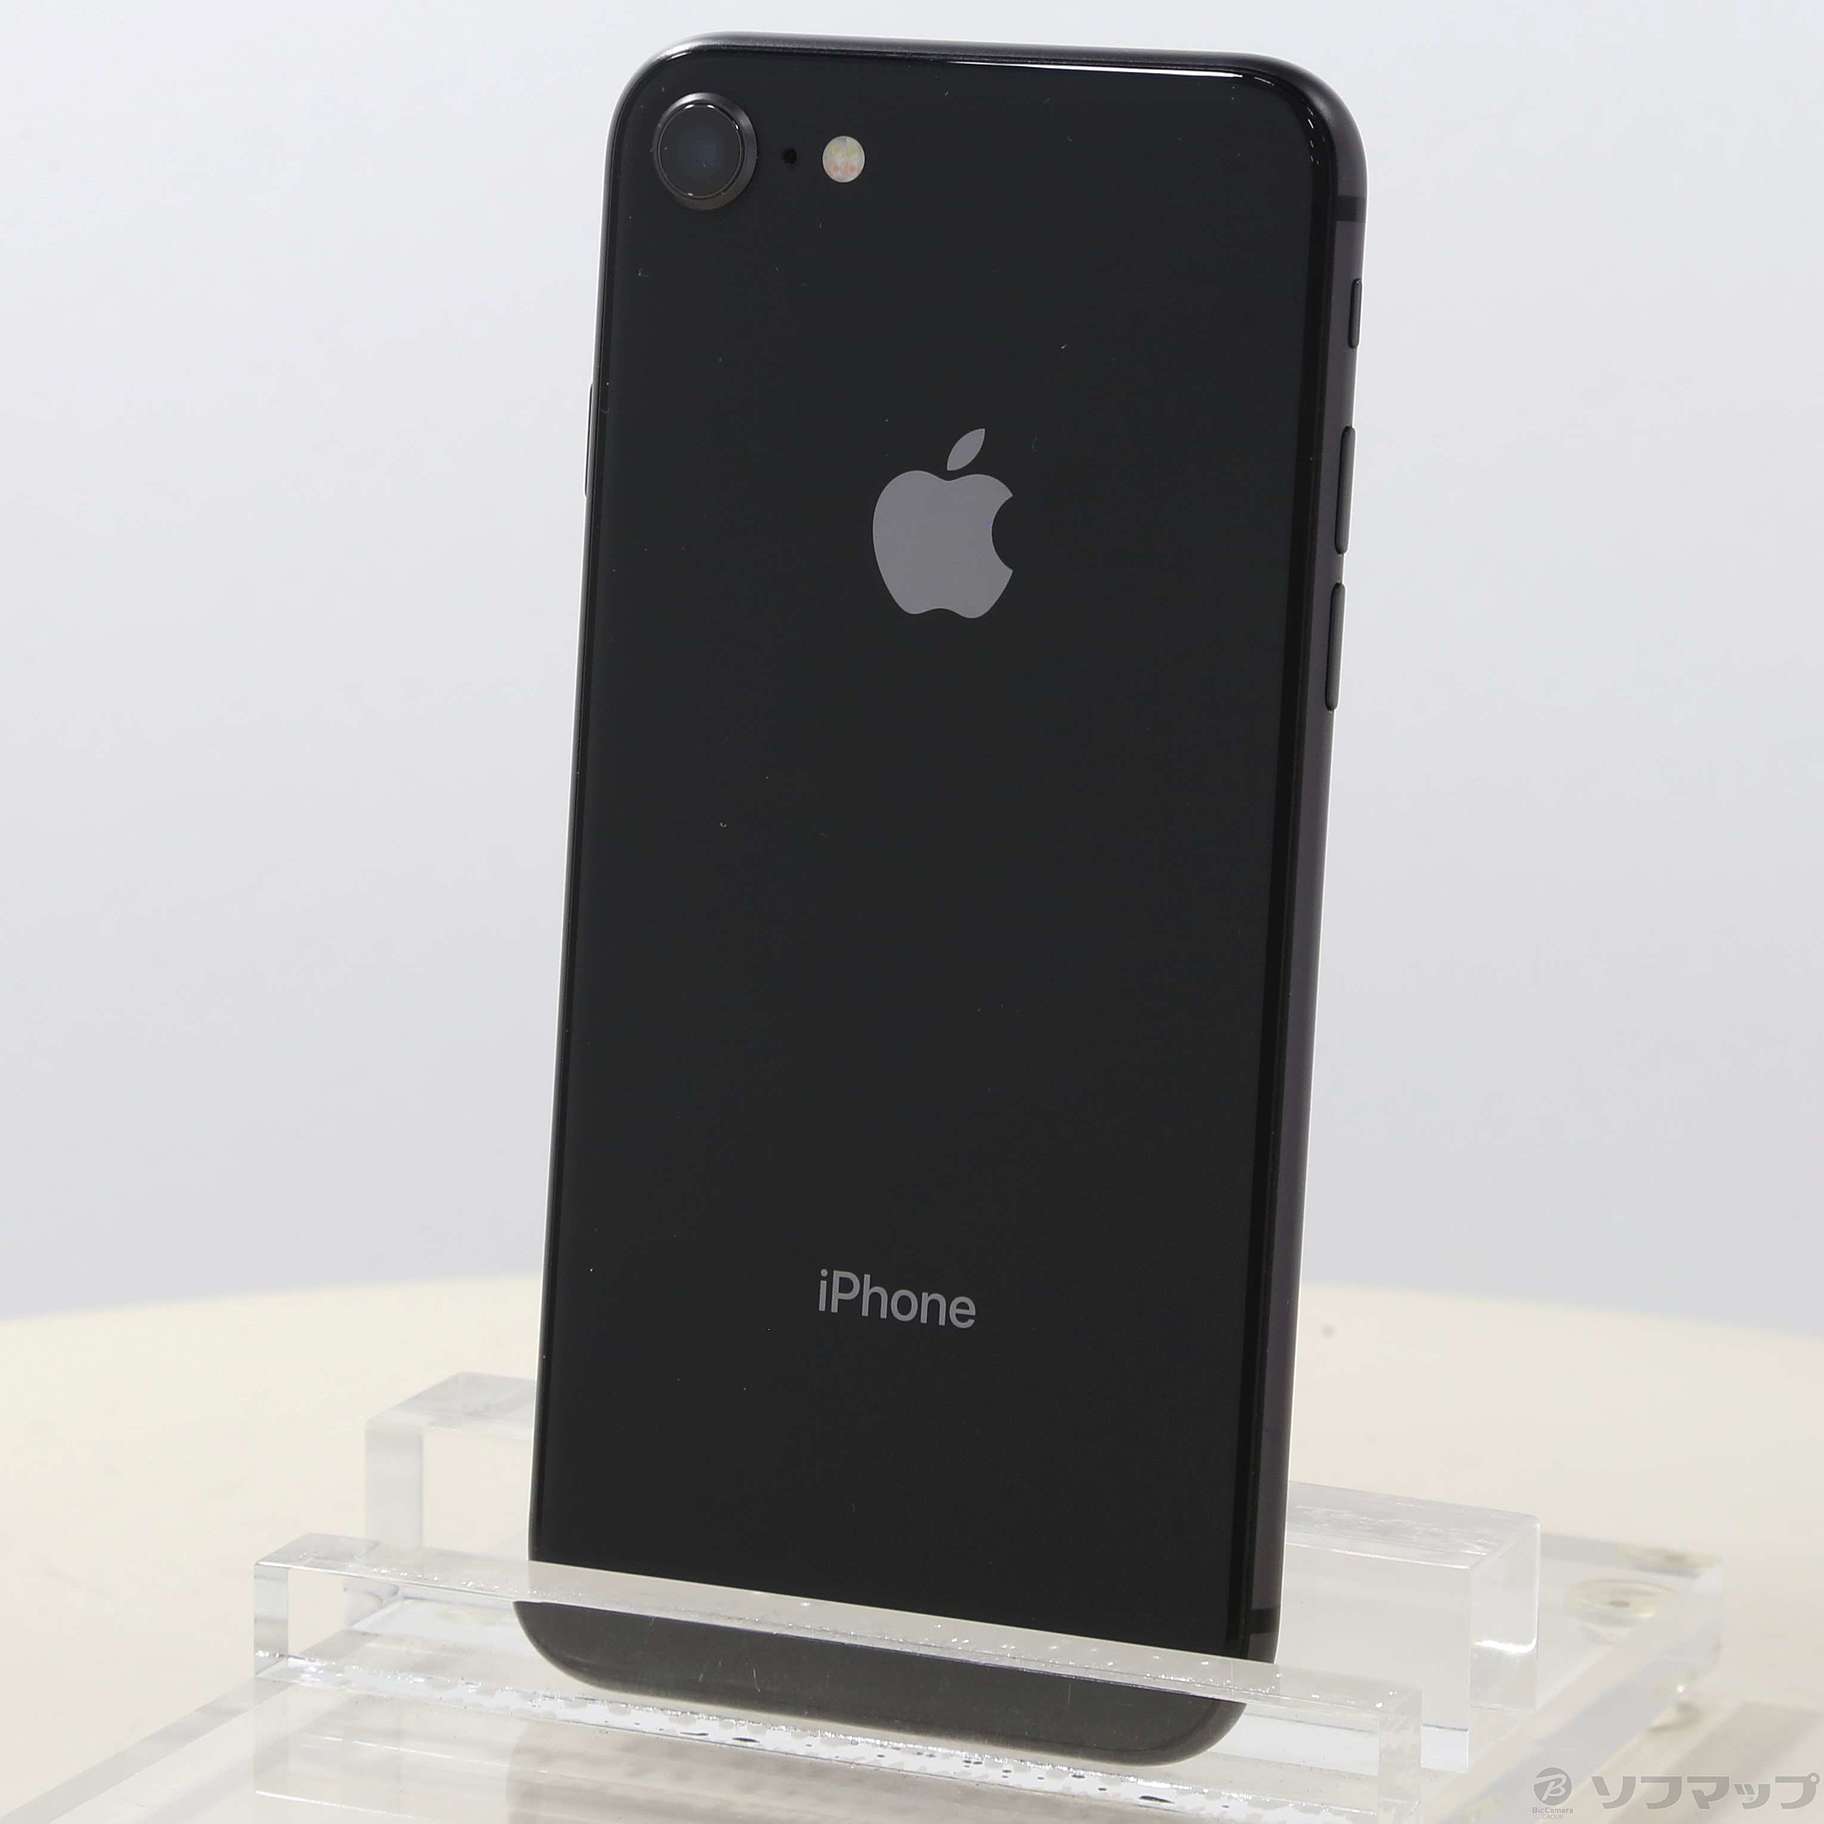 iPhone 8 スペースグレイ 256 GB Softbank - スマートフォン本体